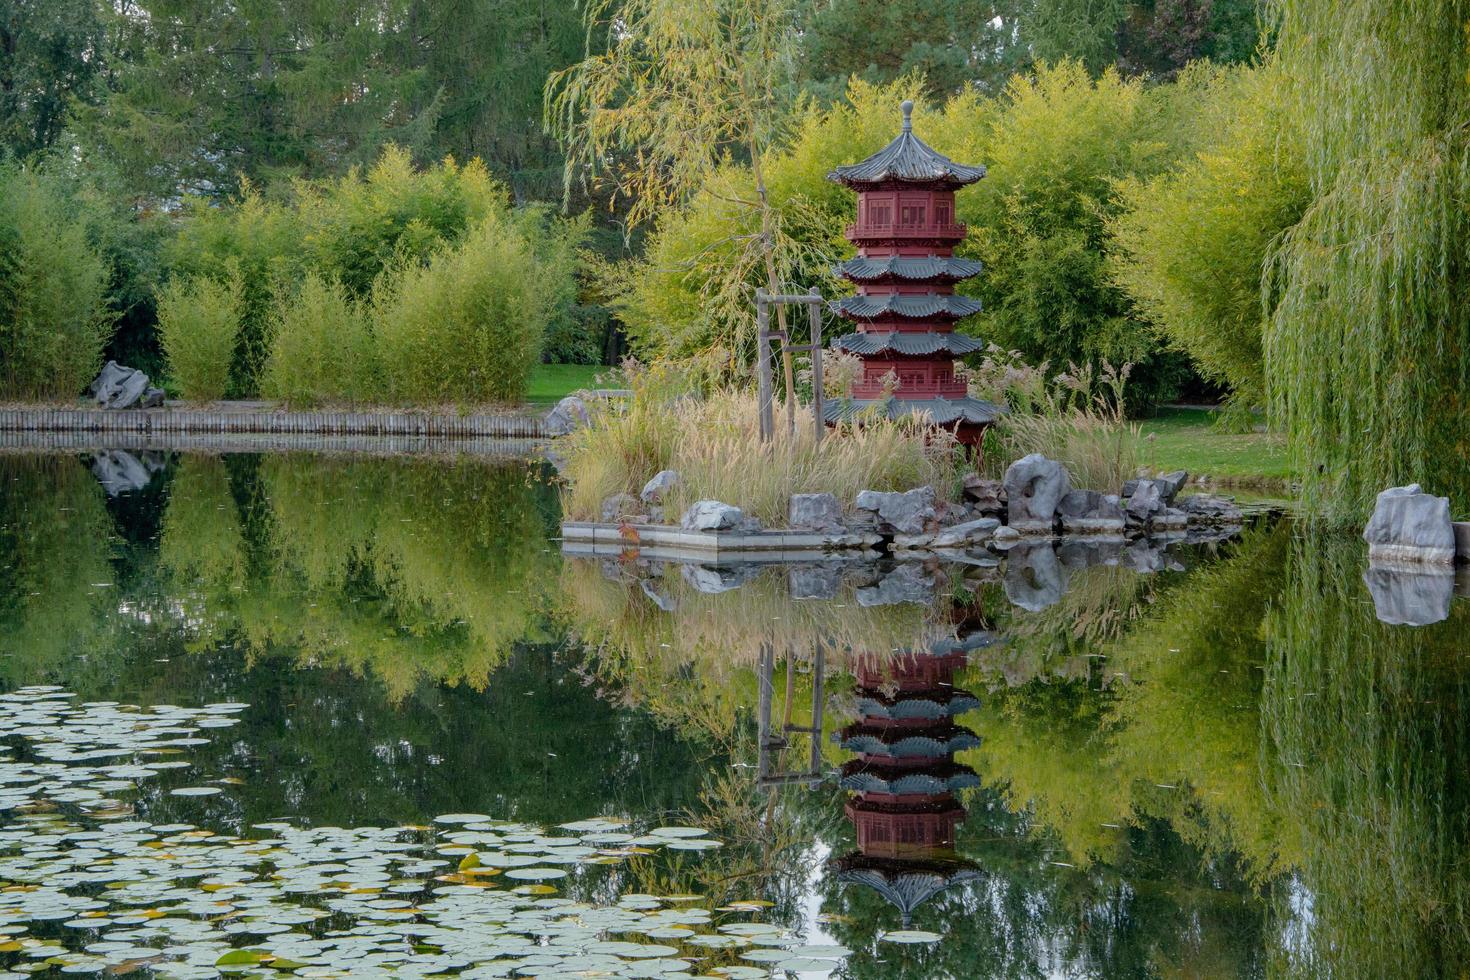 jardins du monde, jardin chinois photo